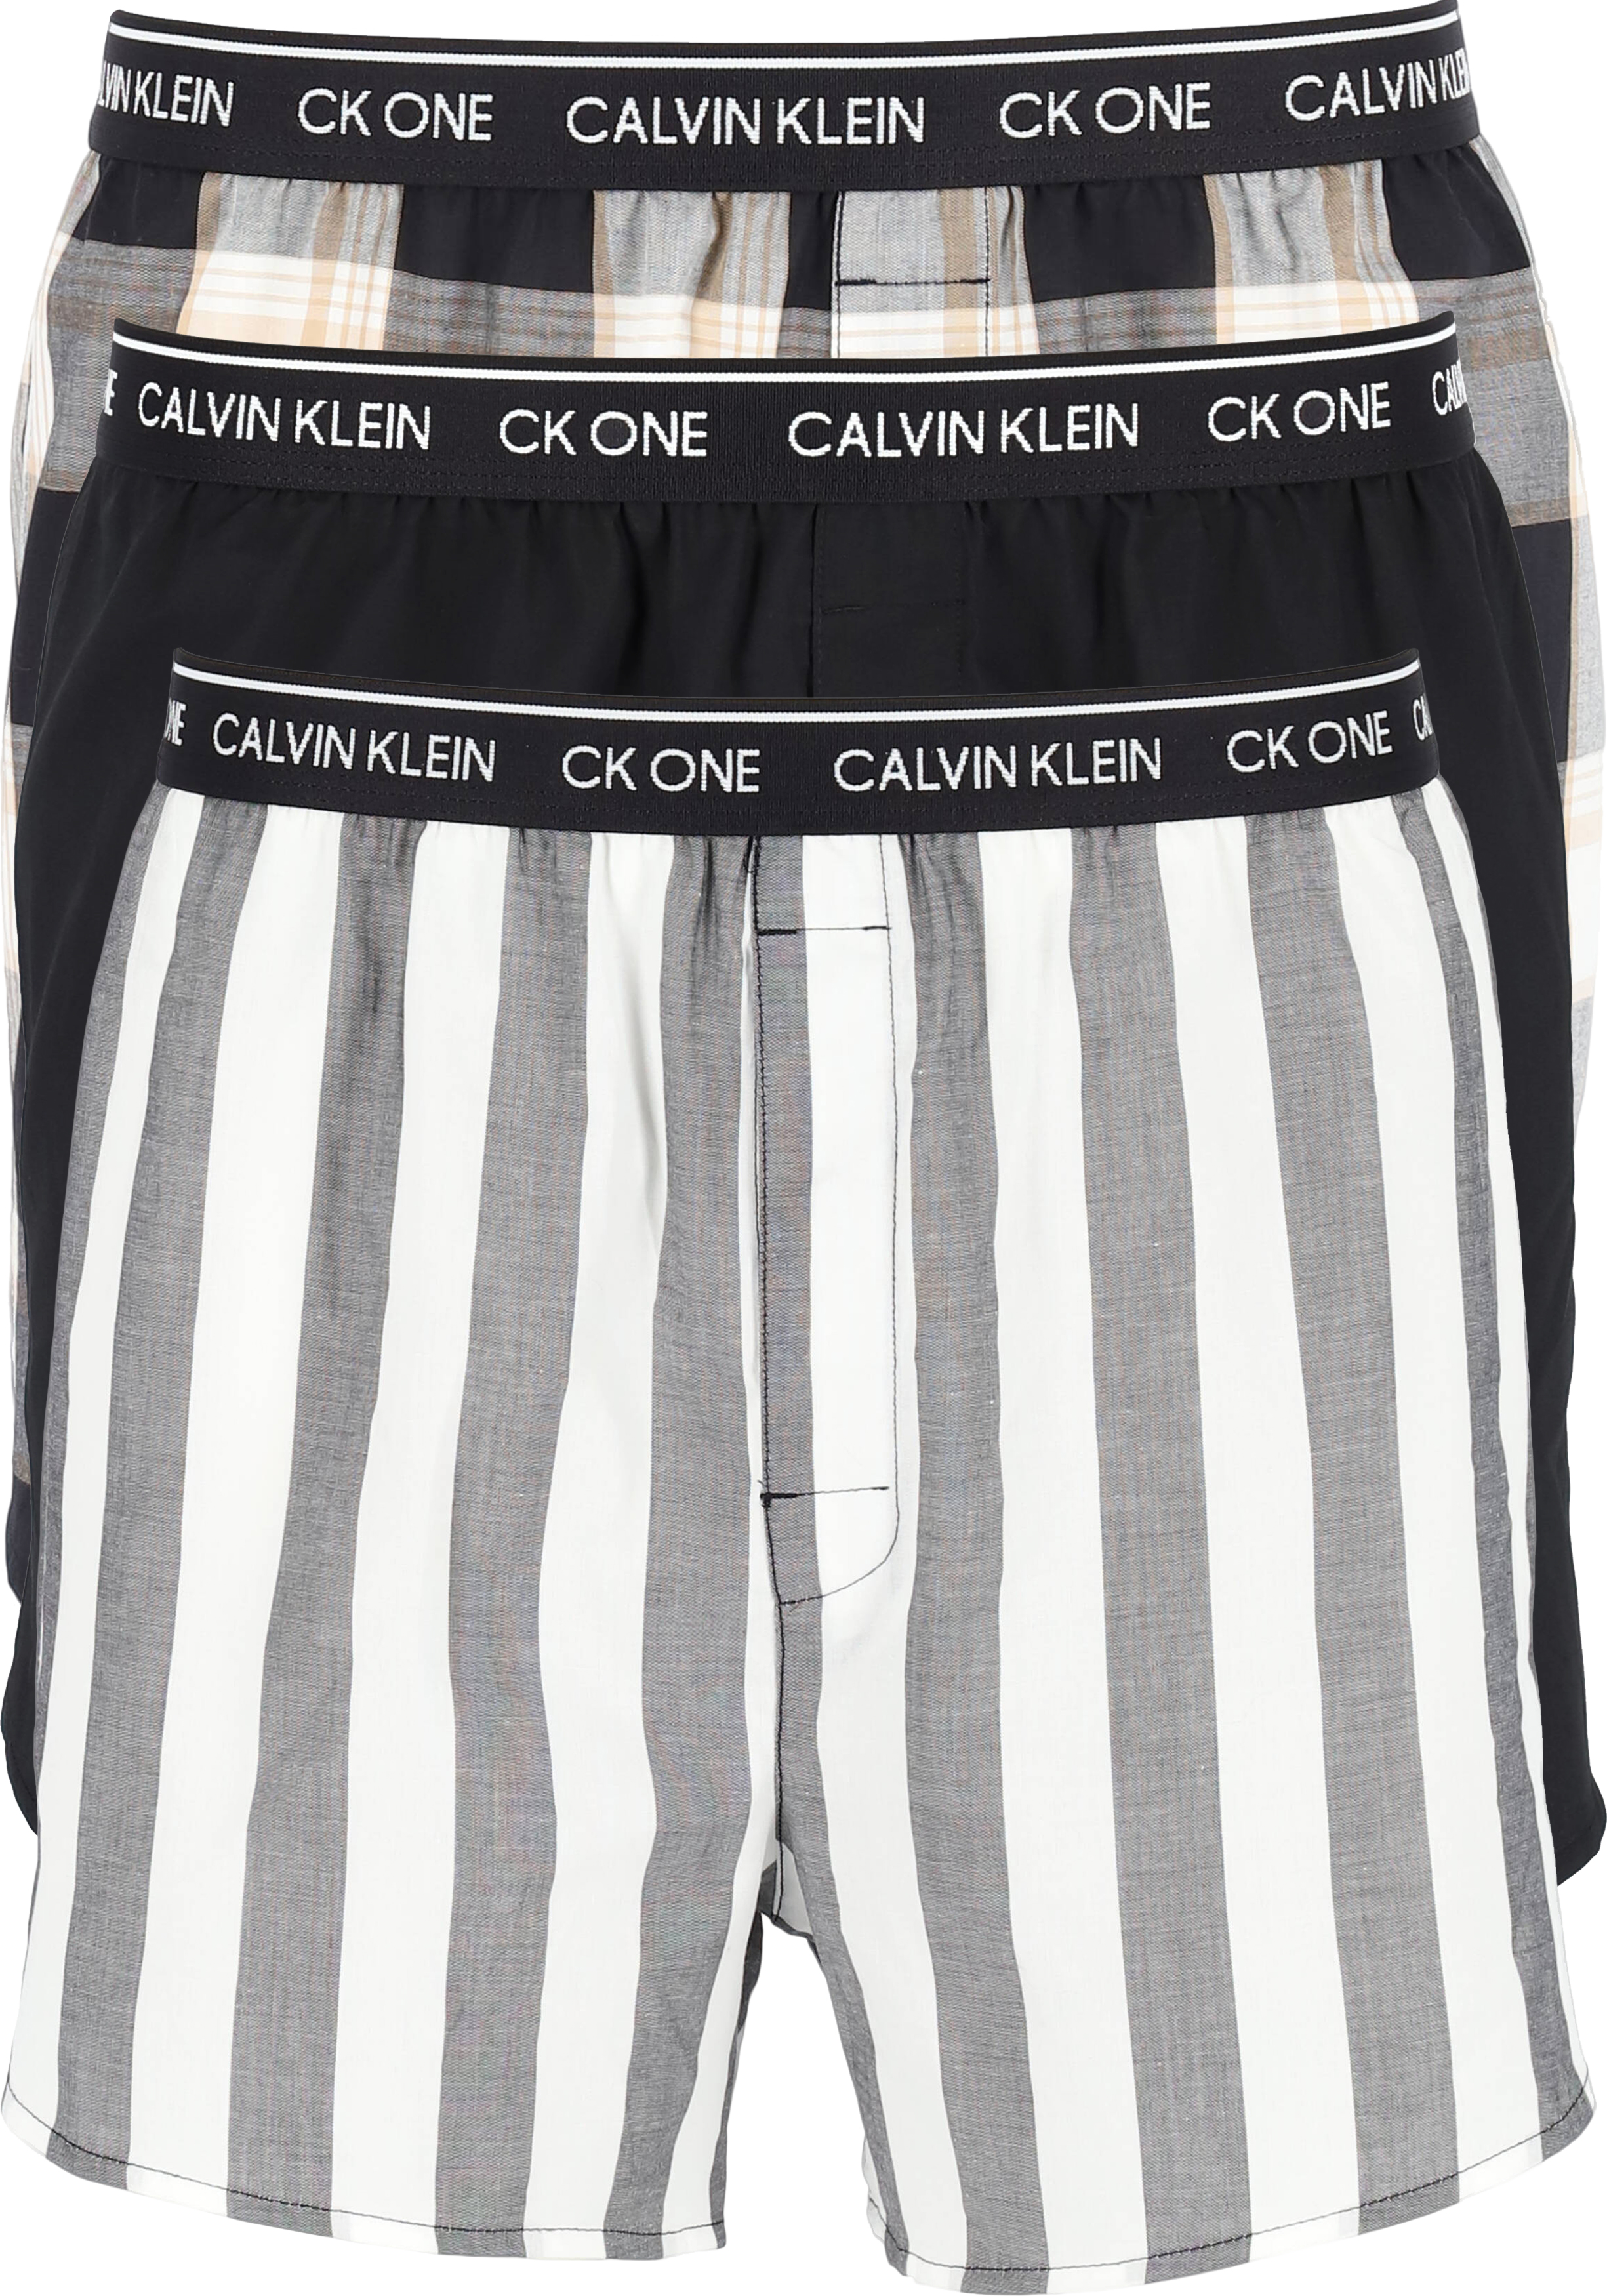 Calvin Klein Woven Boxers Slim Fit (3-pack), boxers katoen, zwart... - Zomer SALE tot 50% korting